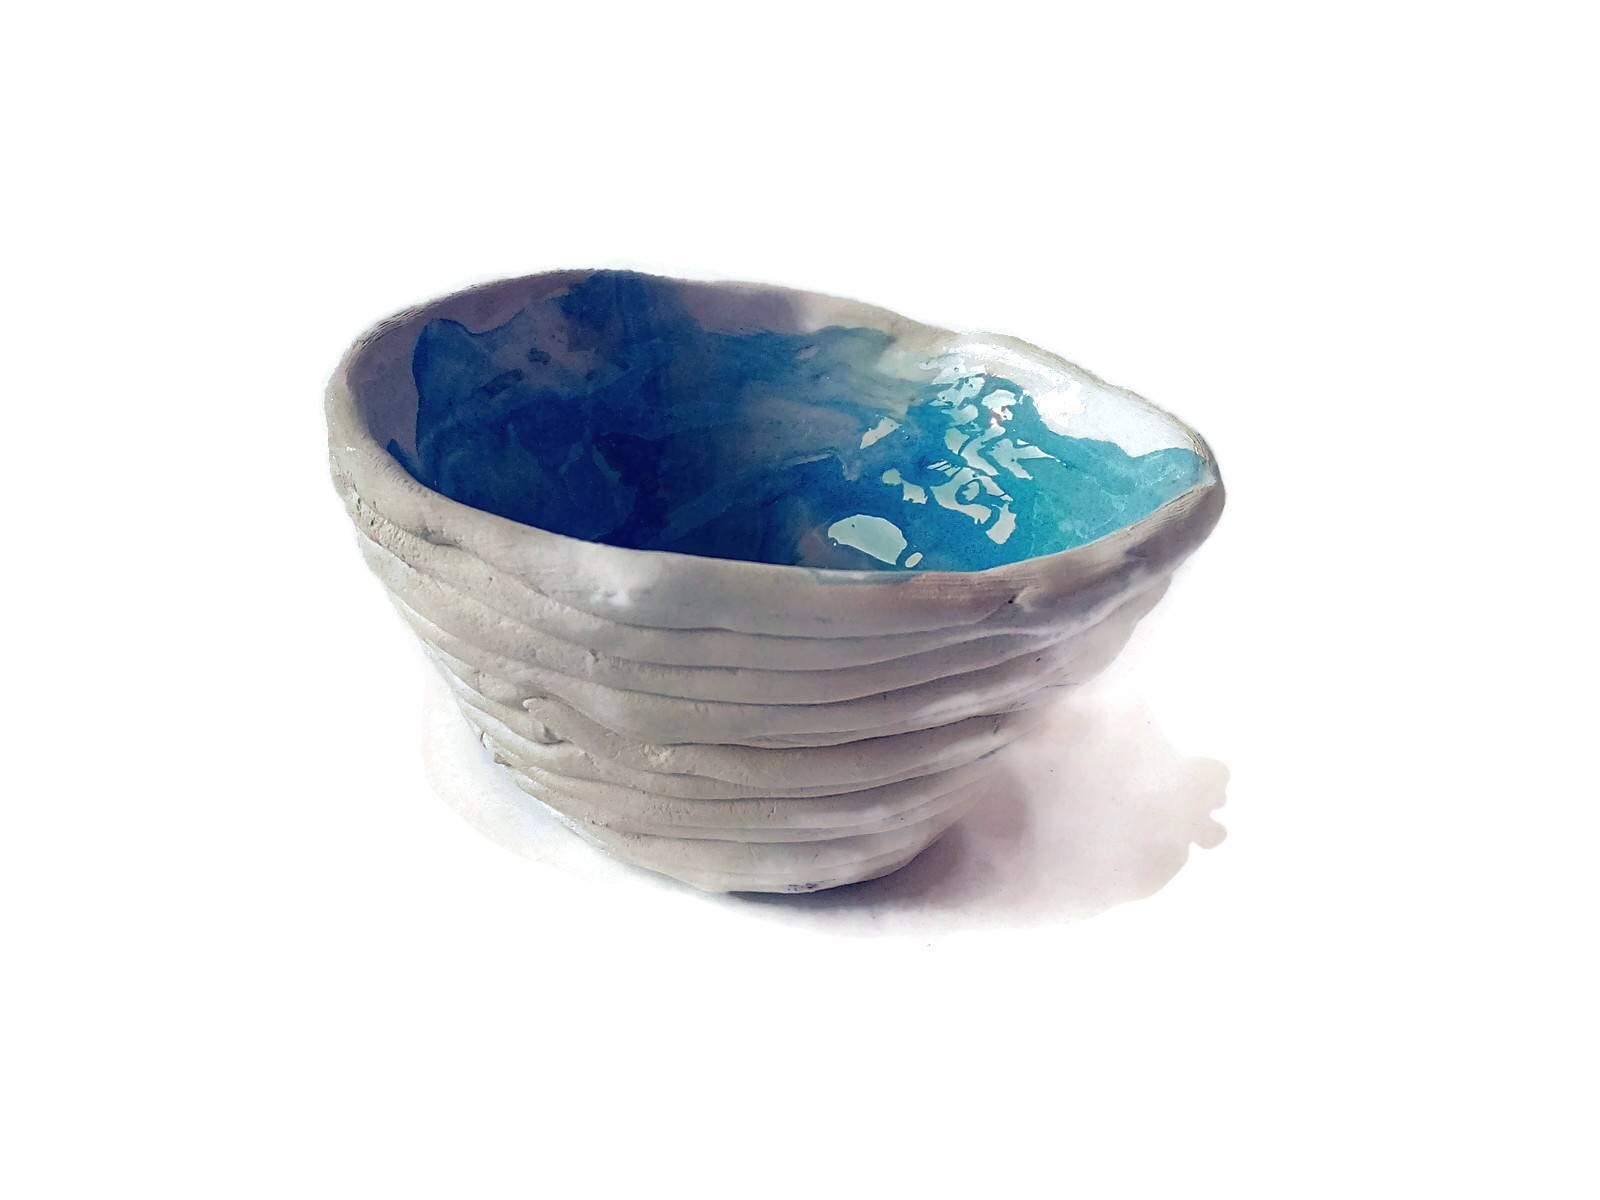 Handmade Ceramic Blue and White Bowl For Home Decor, Small Pottery Snack Bowls, Textured Irregular Shape Candle Holder, Trinket Bowl - Ceramica Ana Rafael